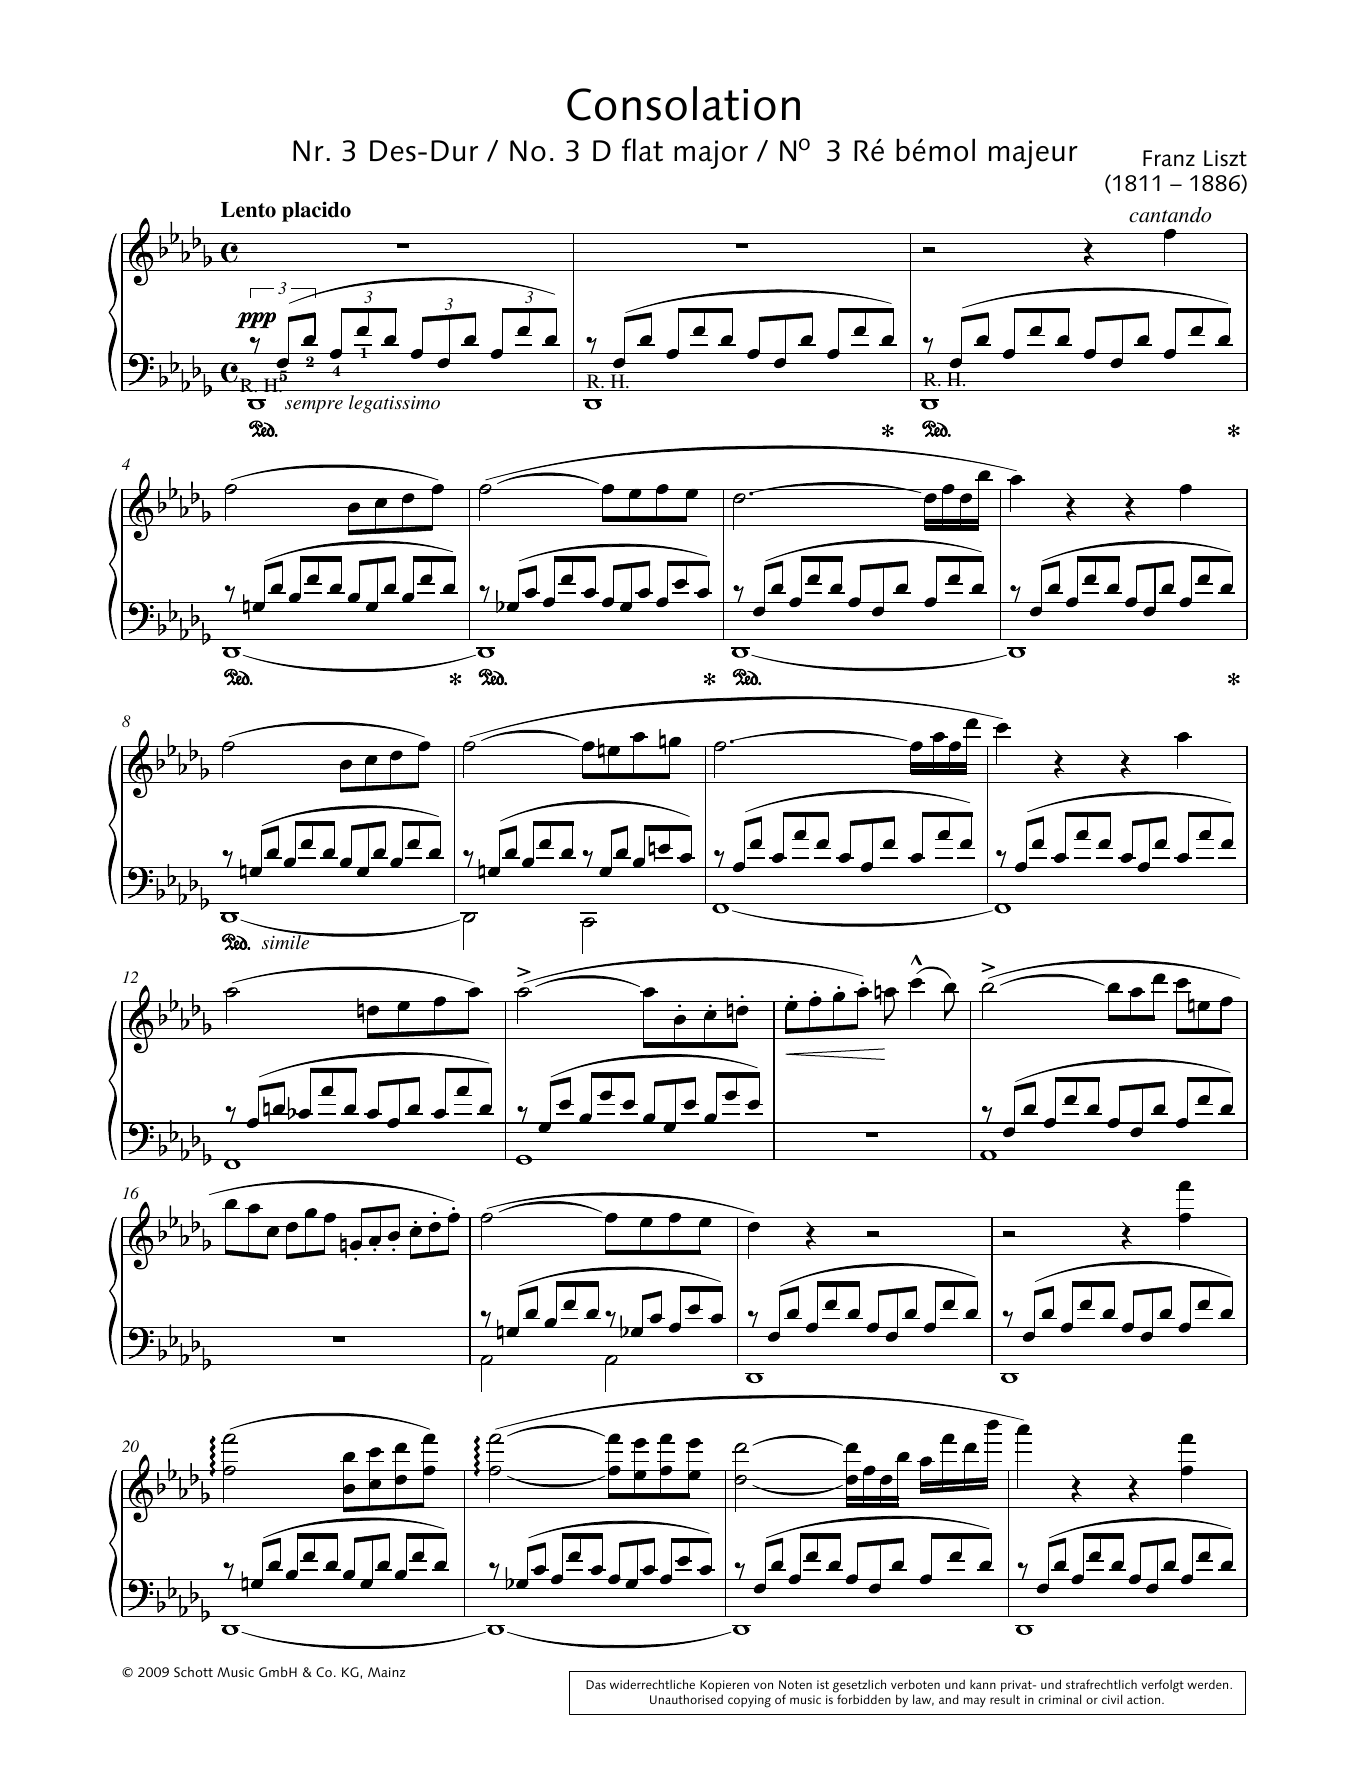 Download Franz Liszt Consolation No. 3 in D-flat major Sheet Music